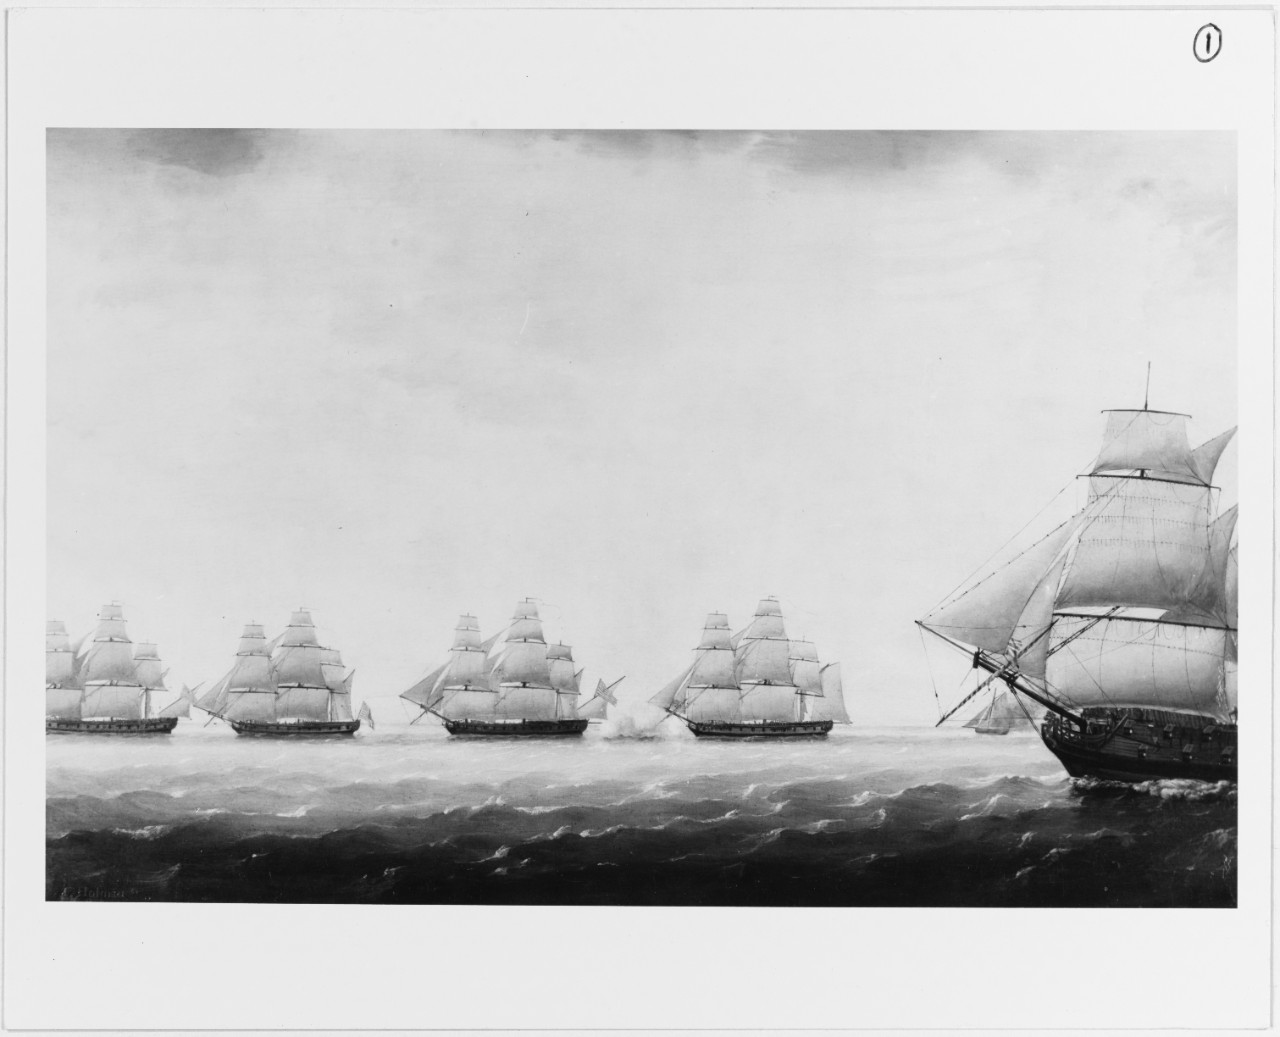 USS BOSTON and HANCOCK vs. HMS FLORA and RAINBOW, 7 July 1777.